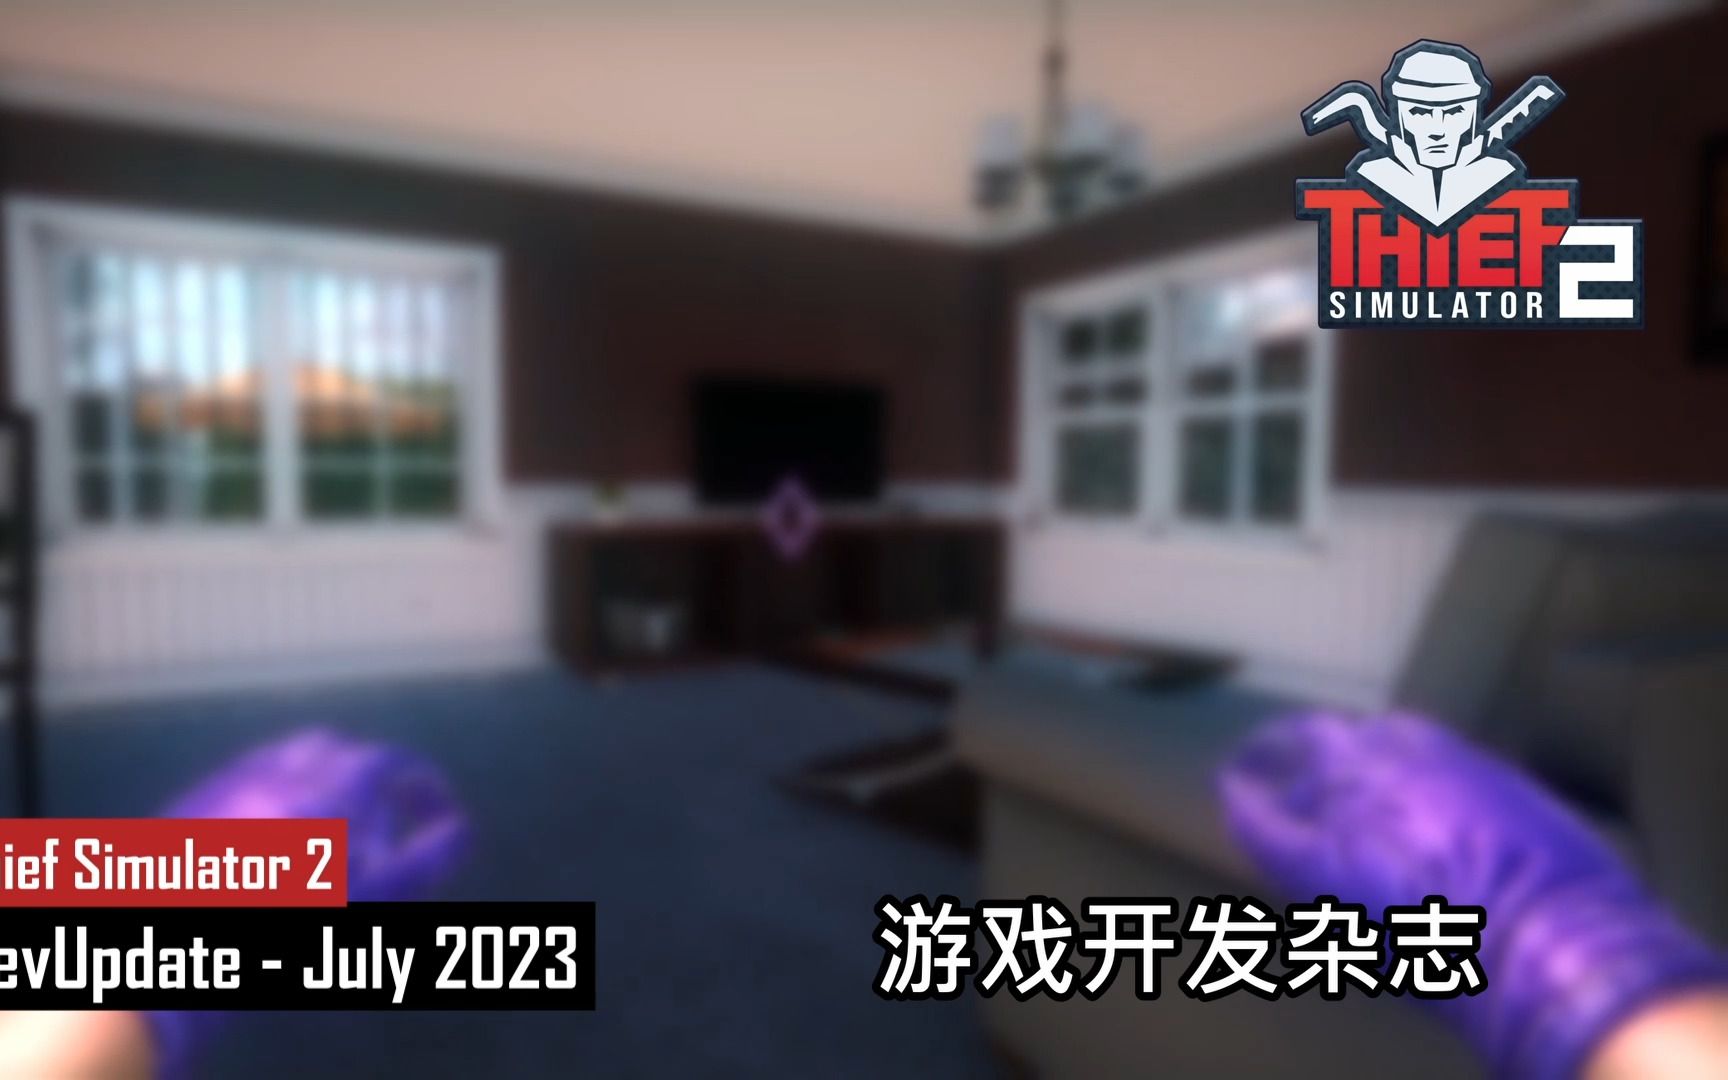 Thief Simulator 2 - DevUpdate - 开发日志 - 真正的小偷模拟器视频游戏 - 支持中文